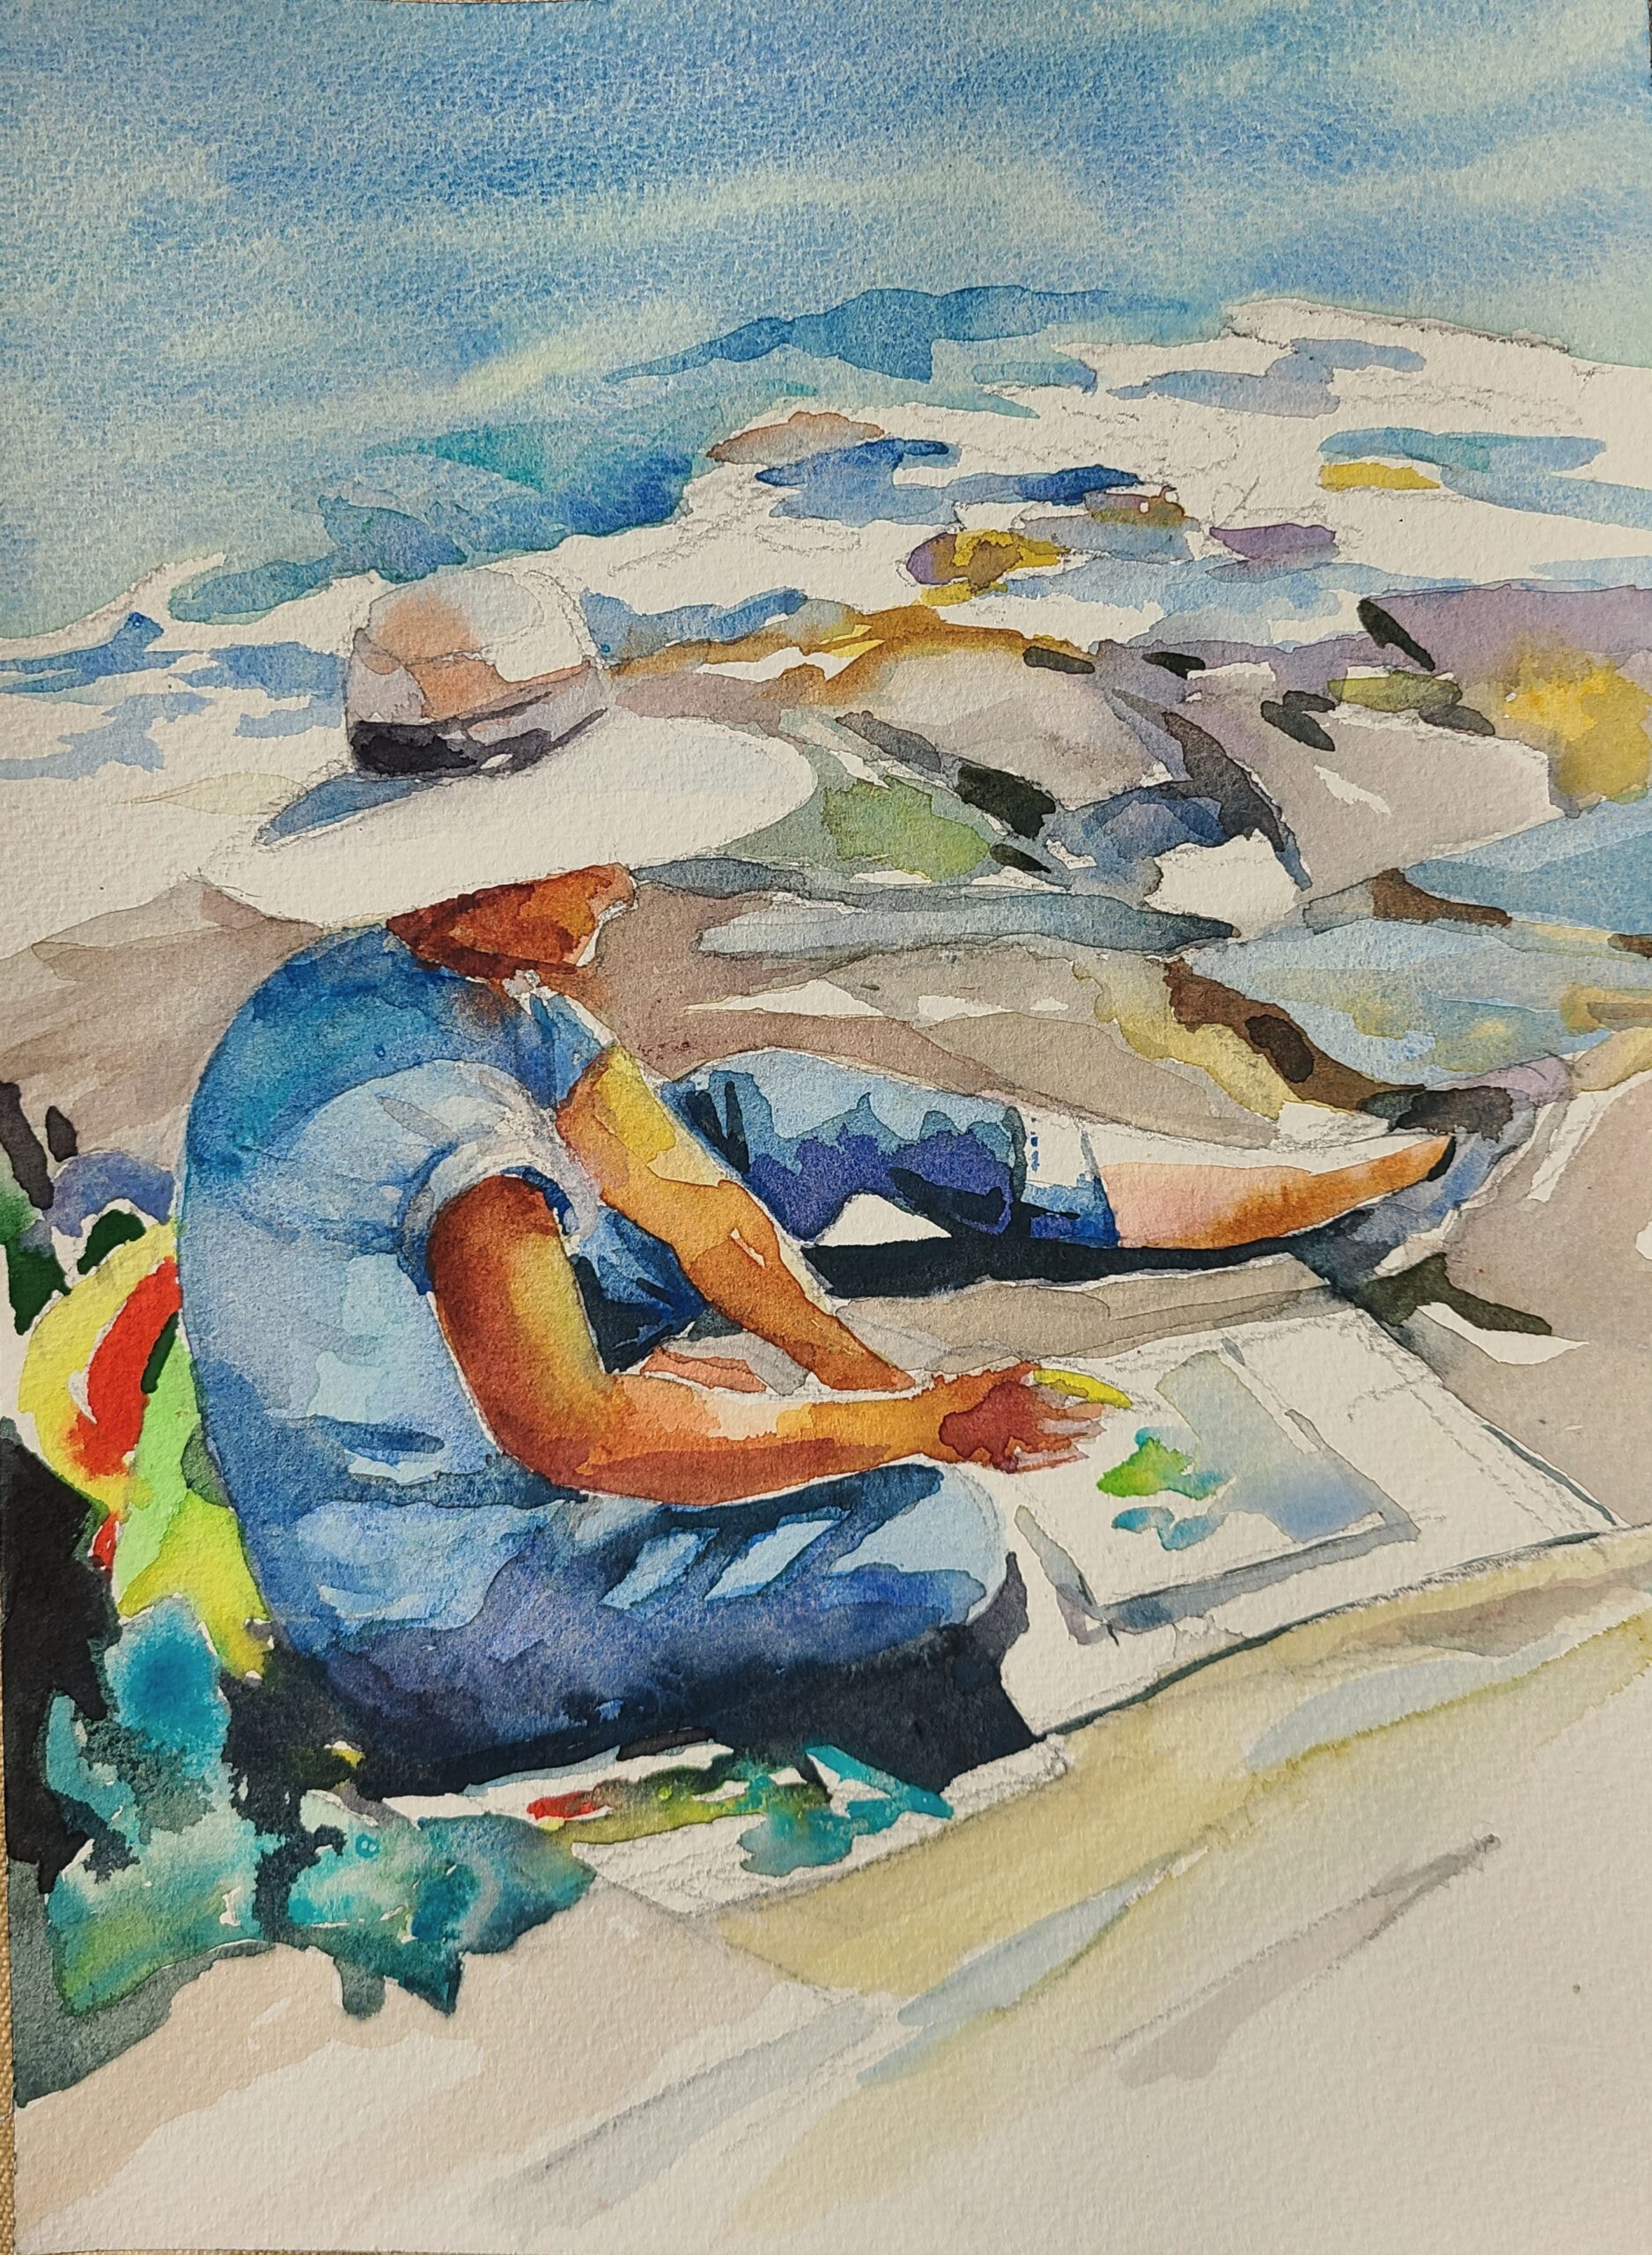 Patricia Painting